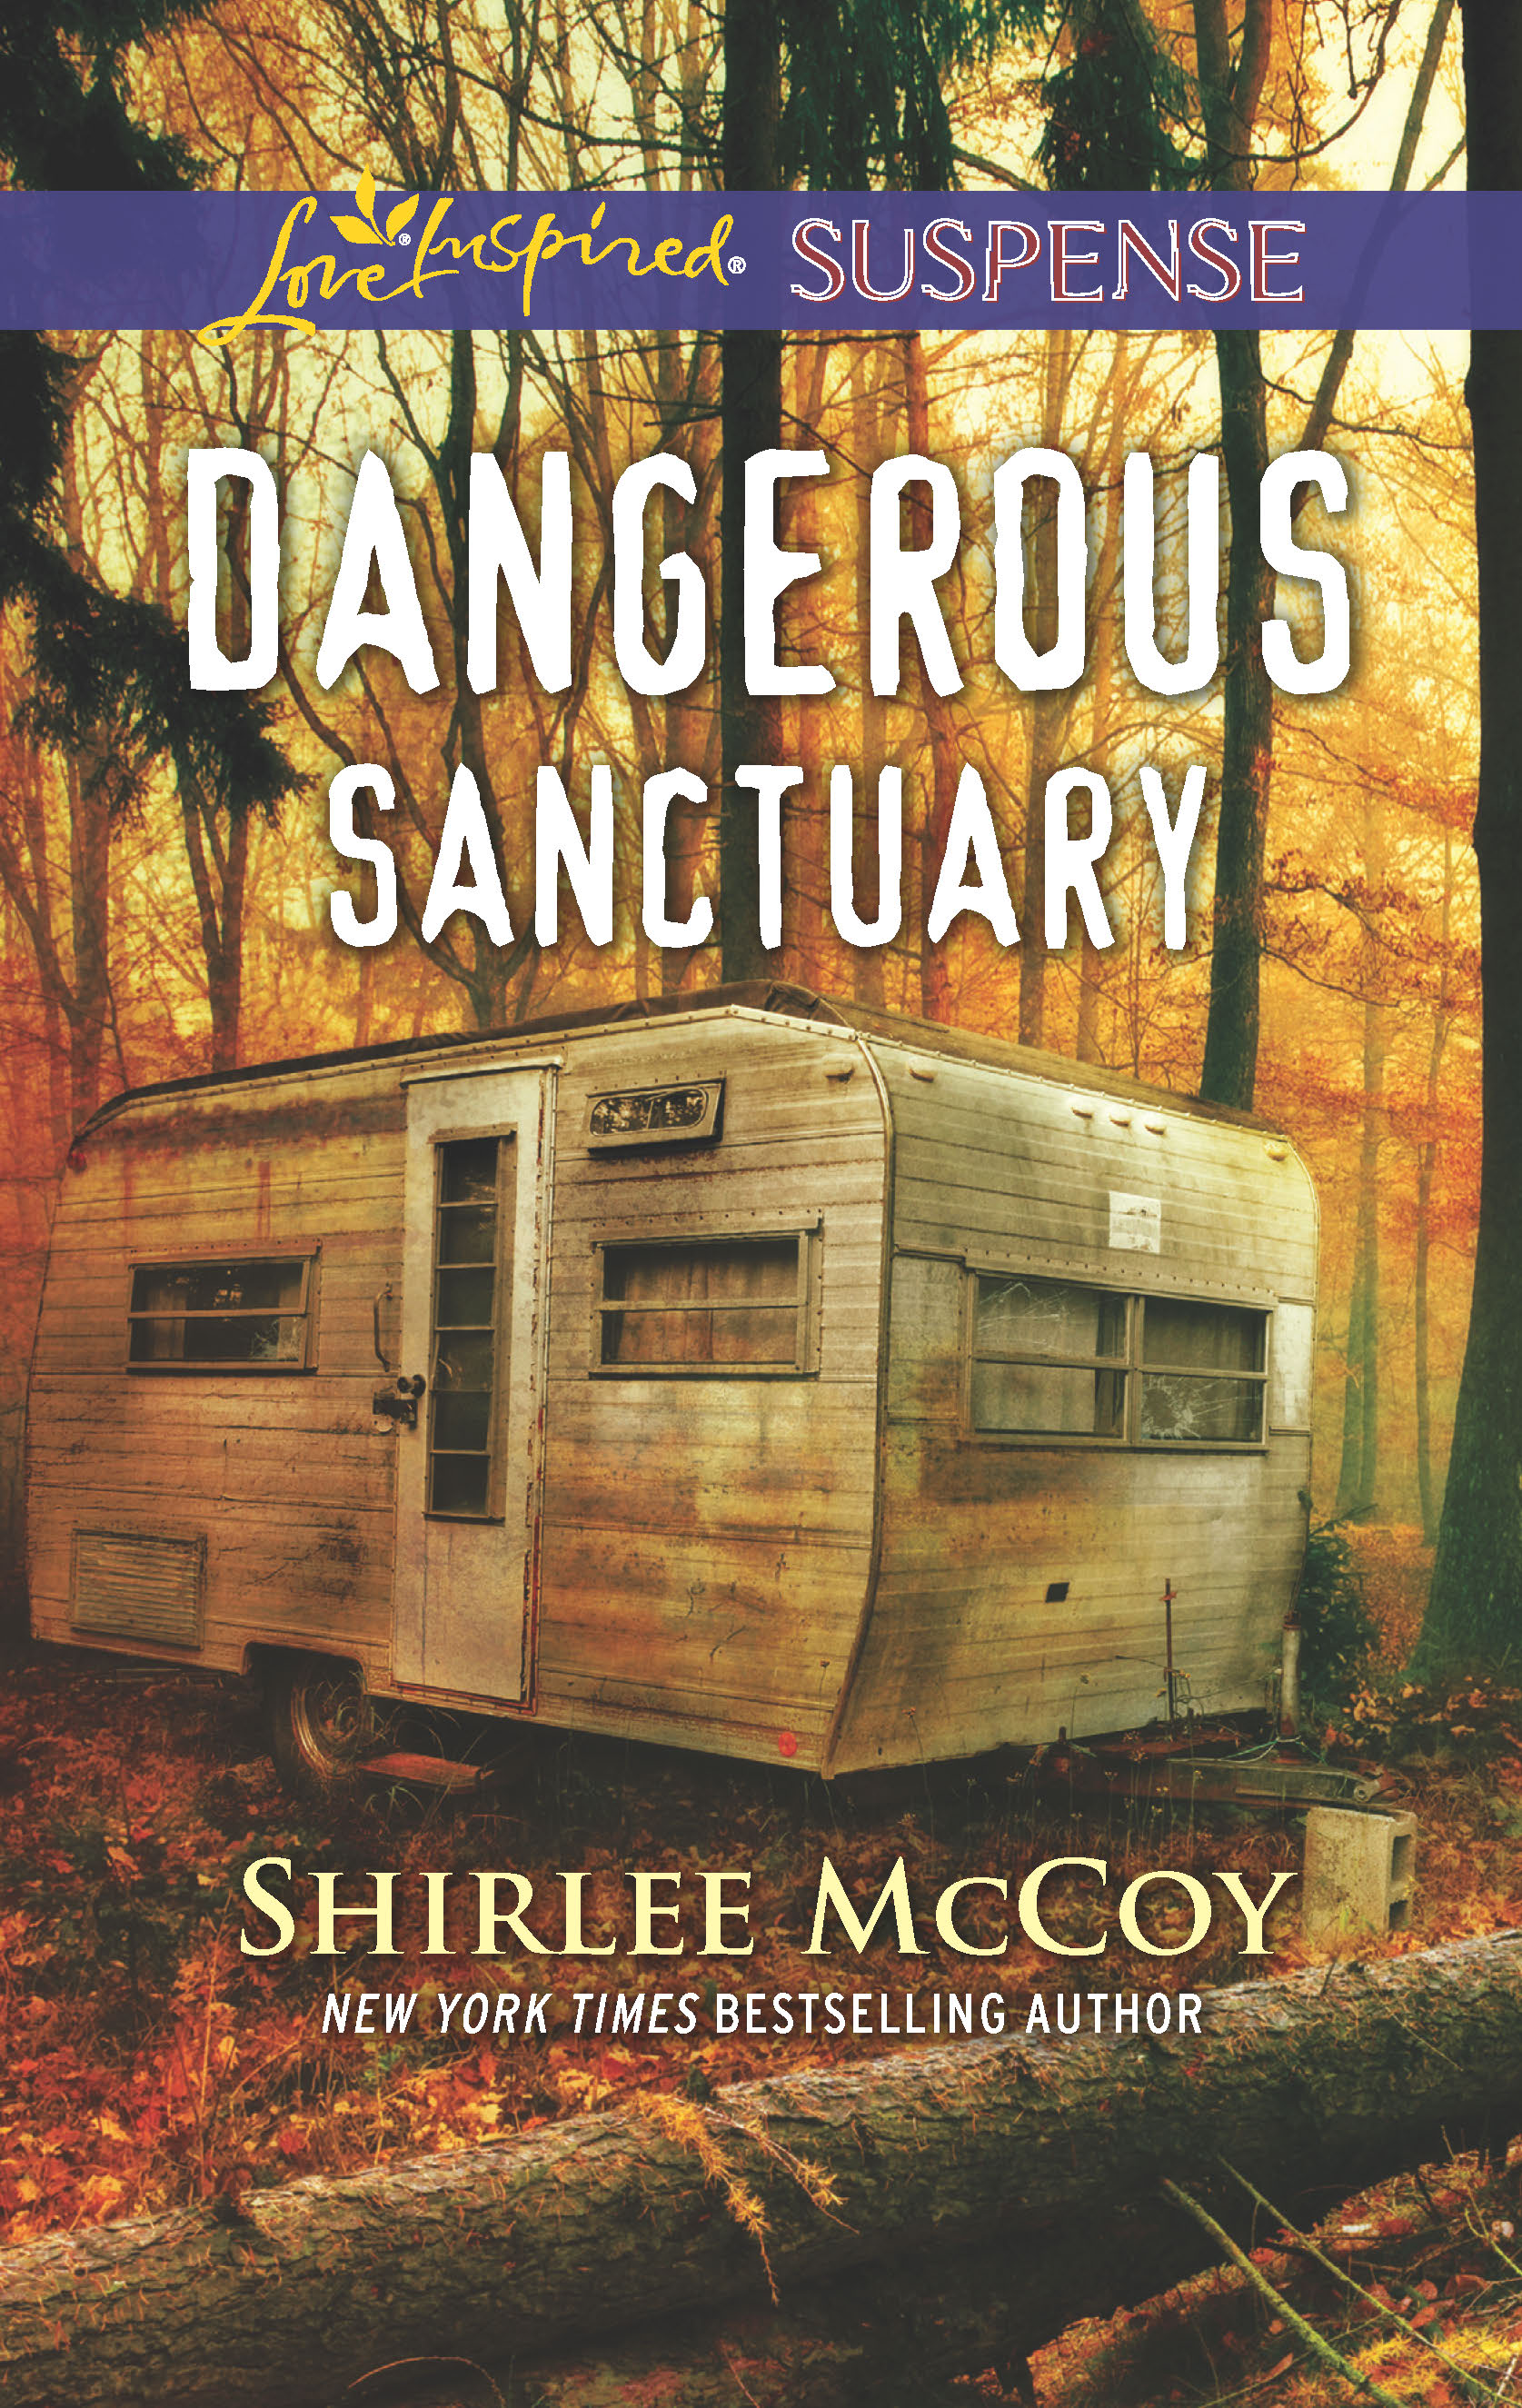 Love Inspired Suspense author Shirlee McCoy - Dangerous Sanctuary book cover